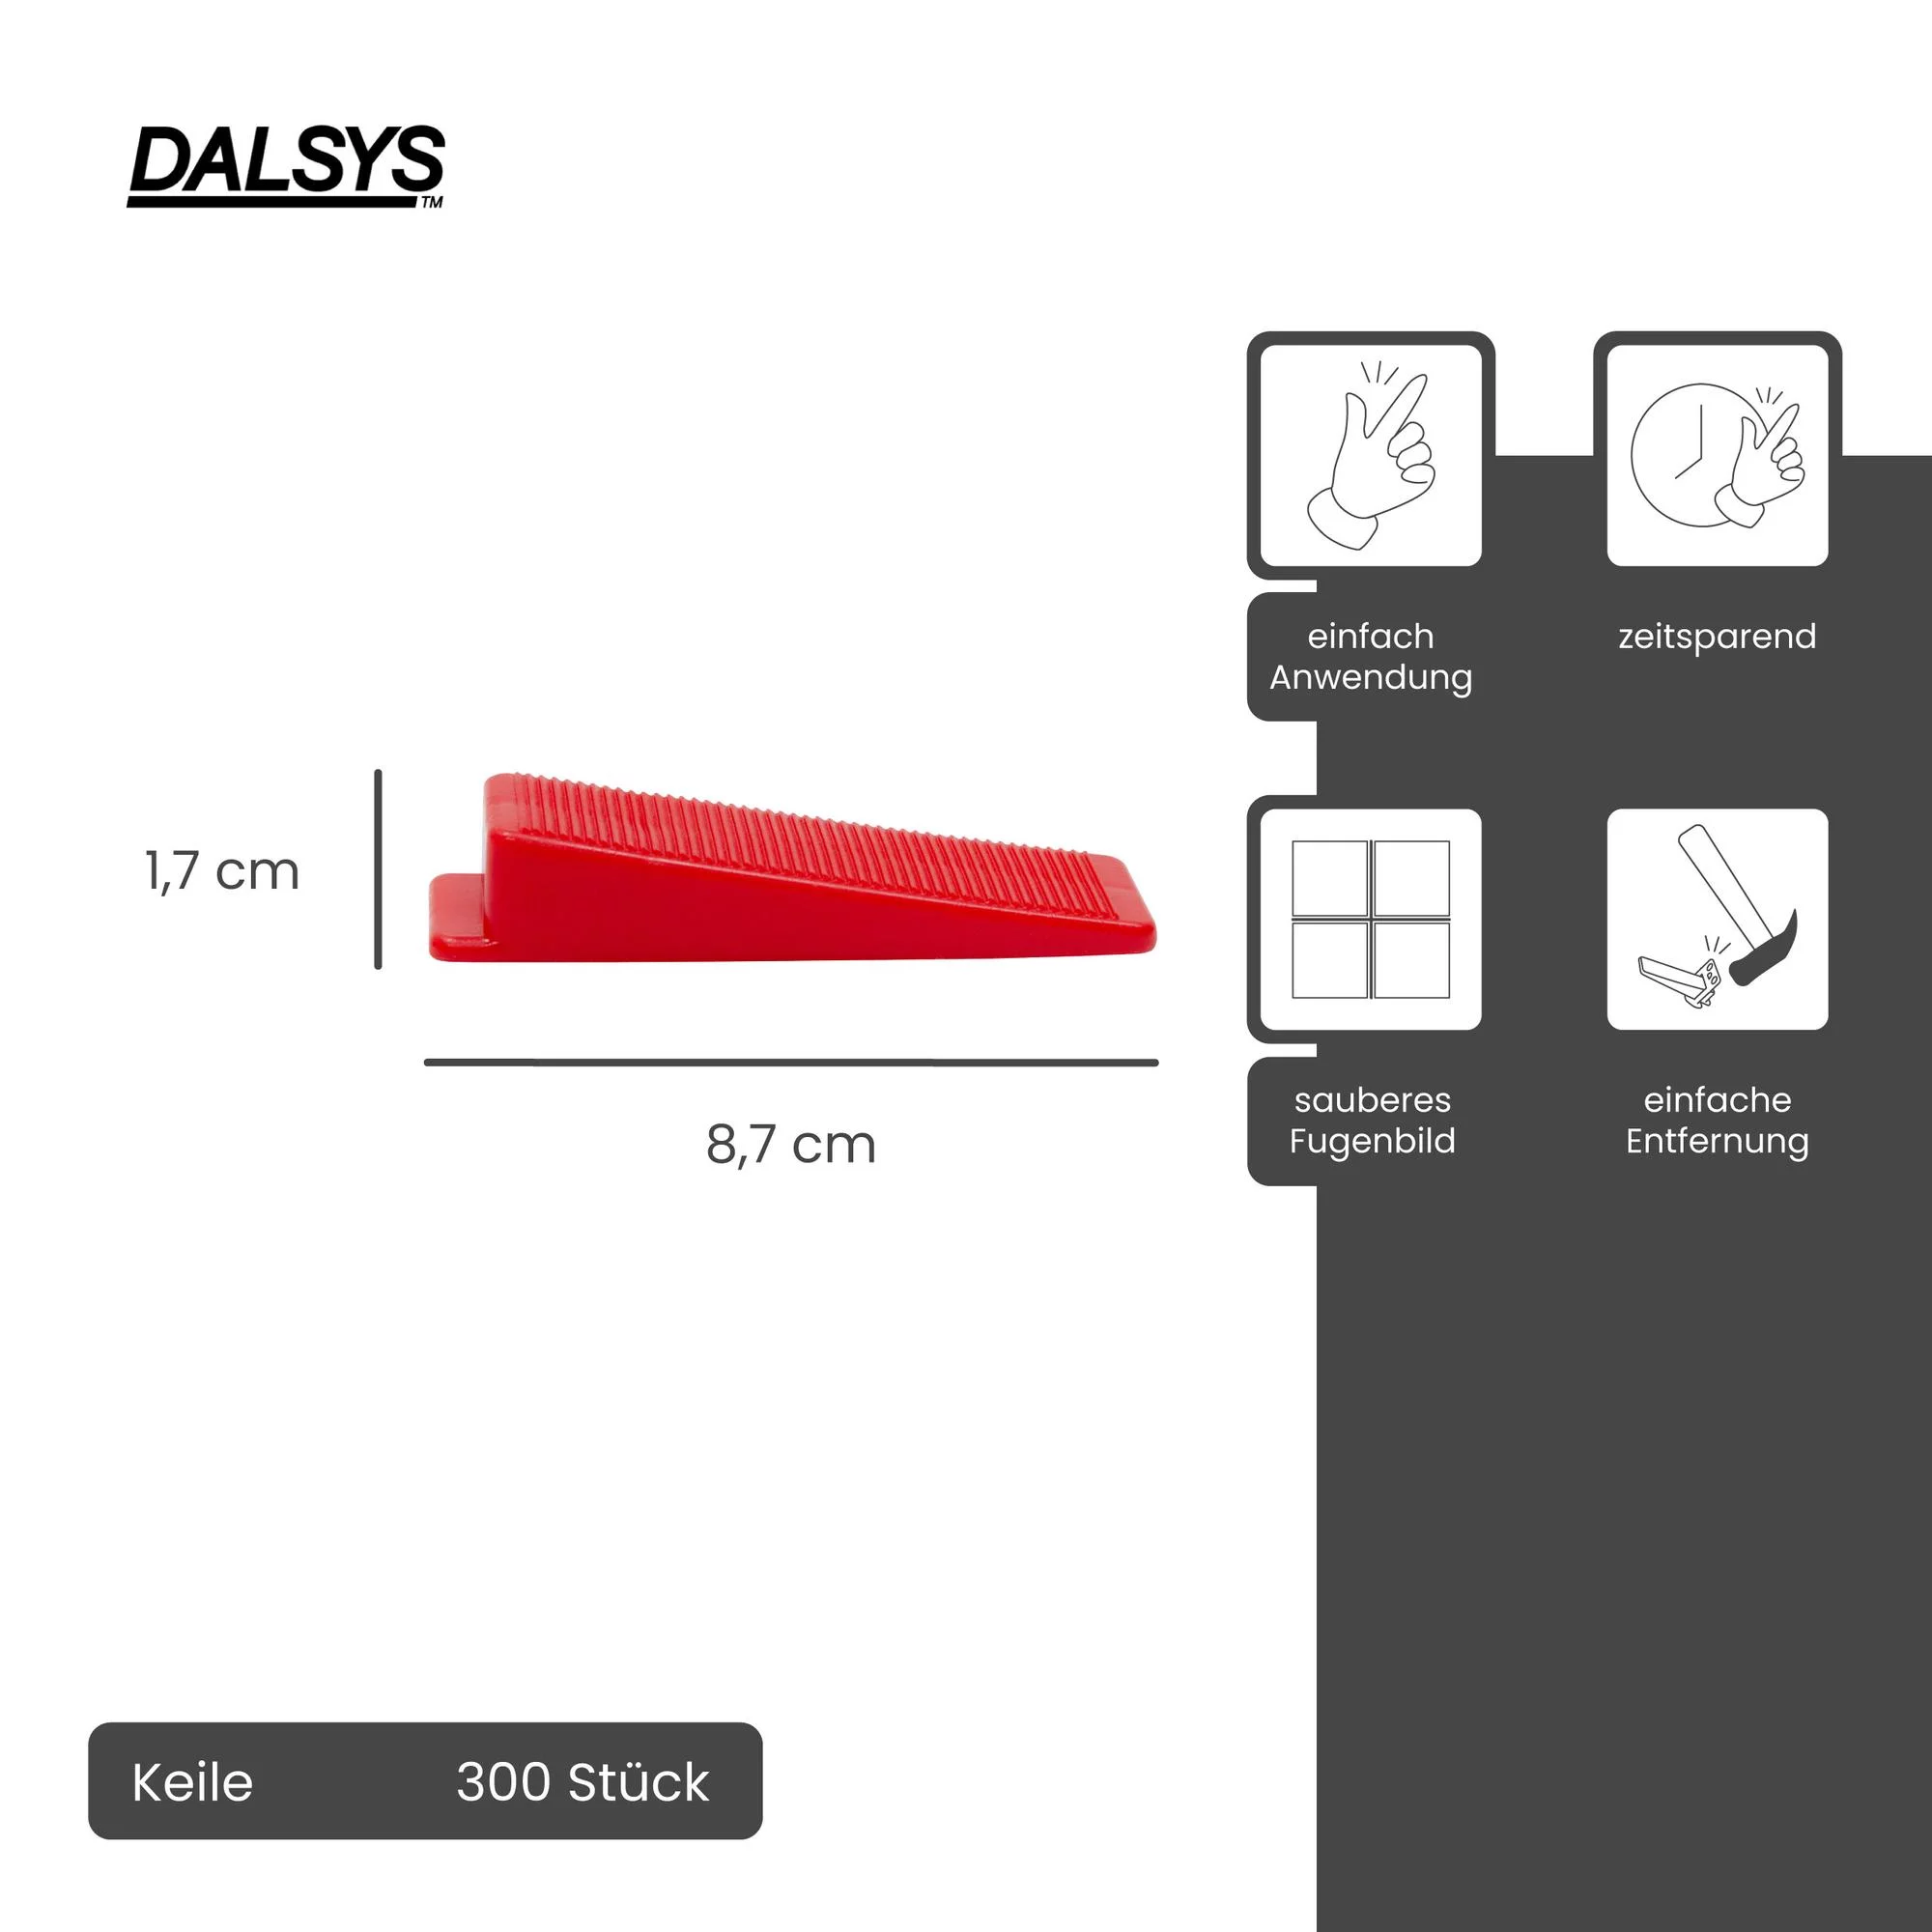 dalsys-fliesen-nivelliersystem--300-keile-keile